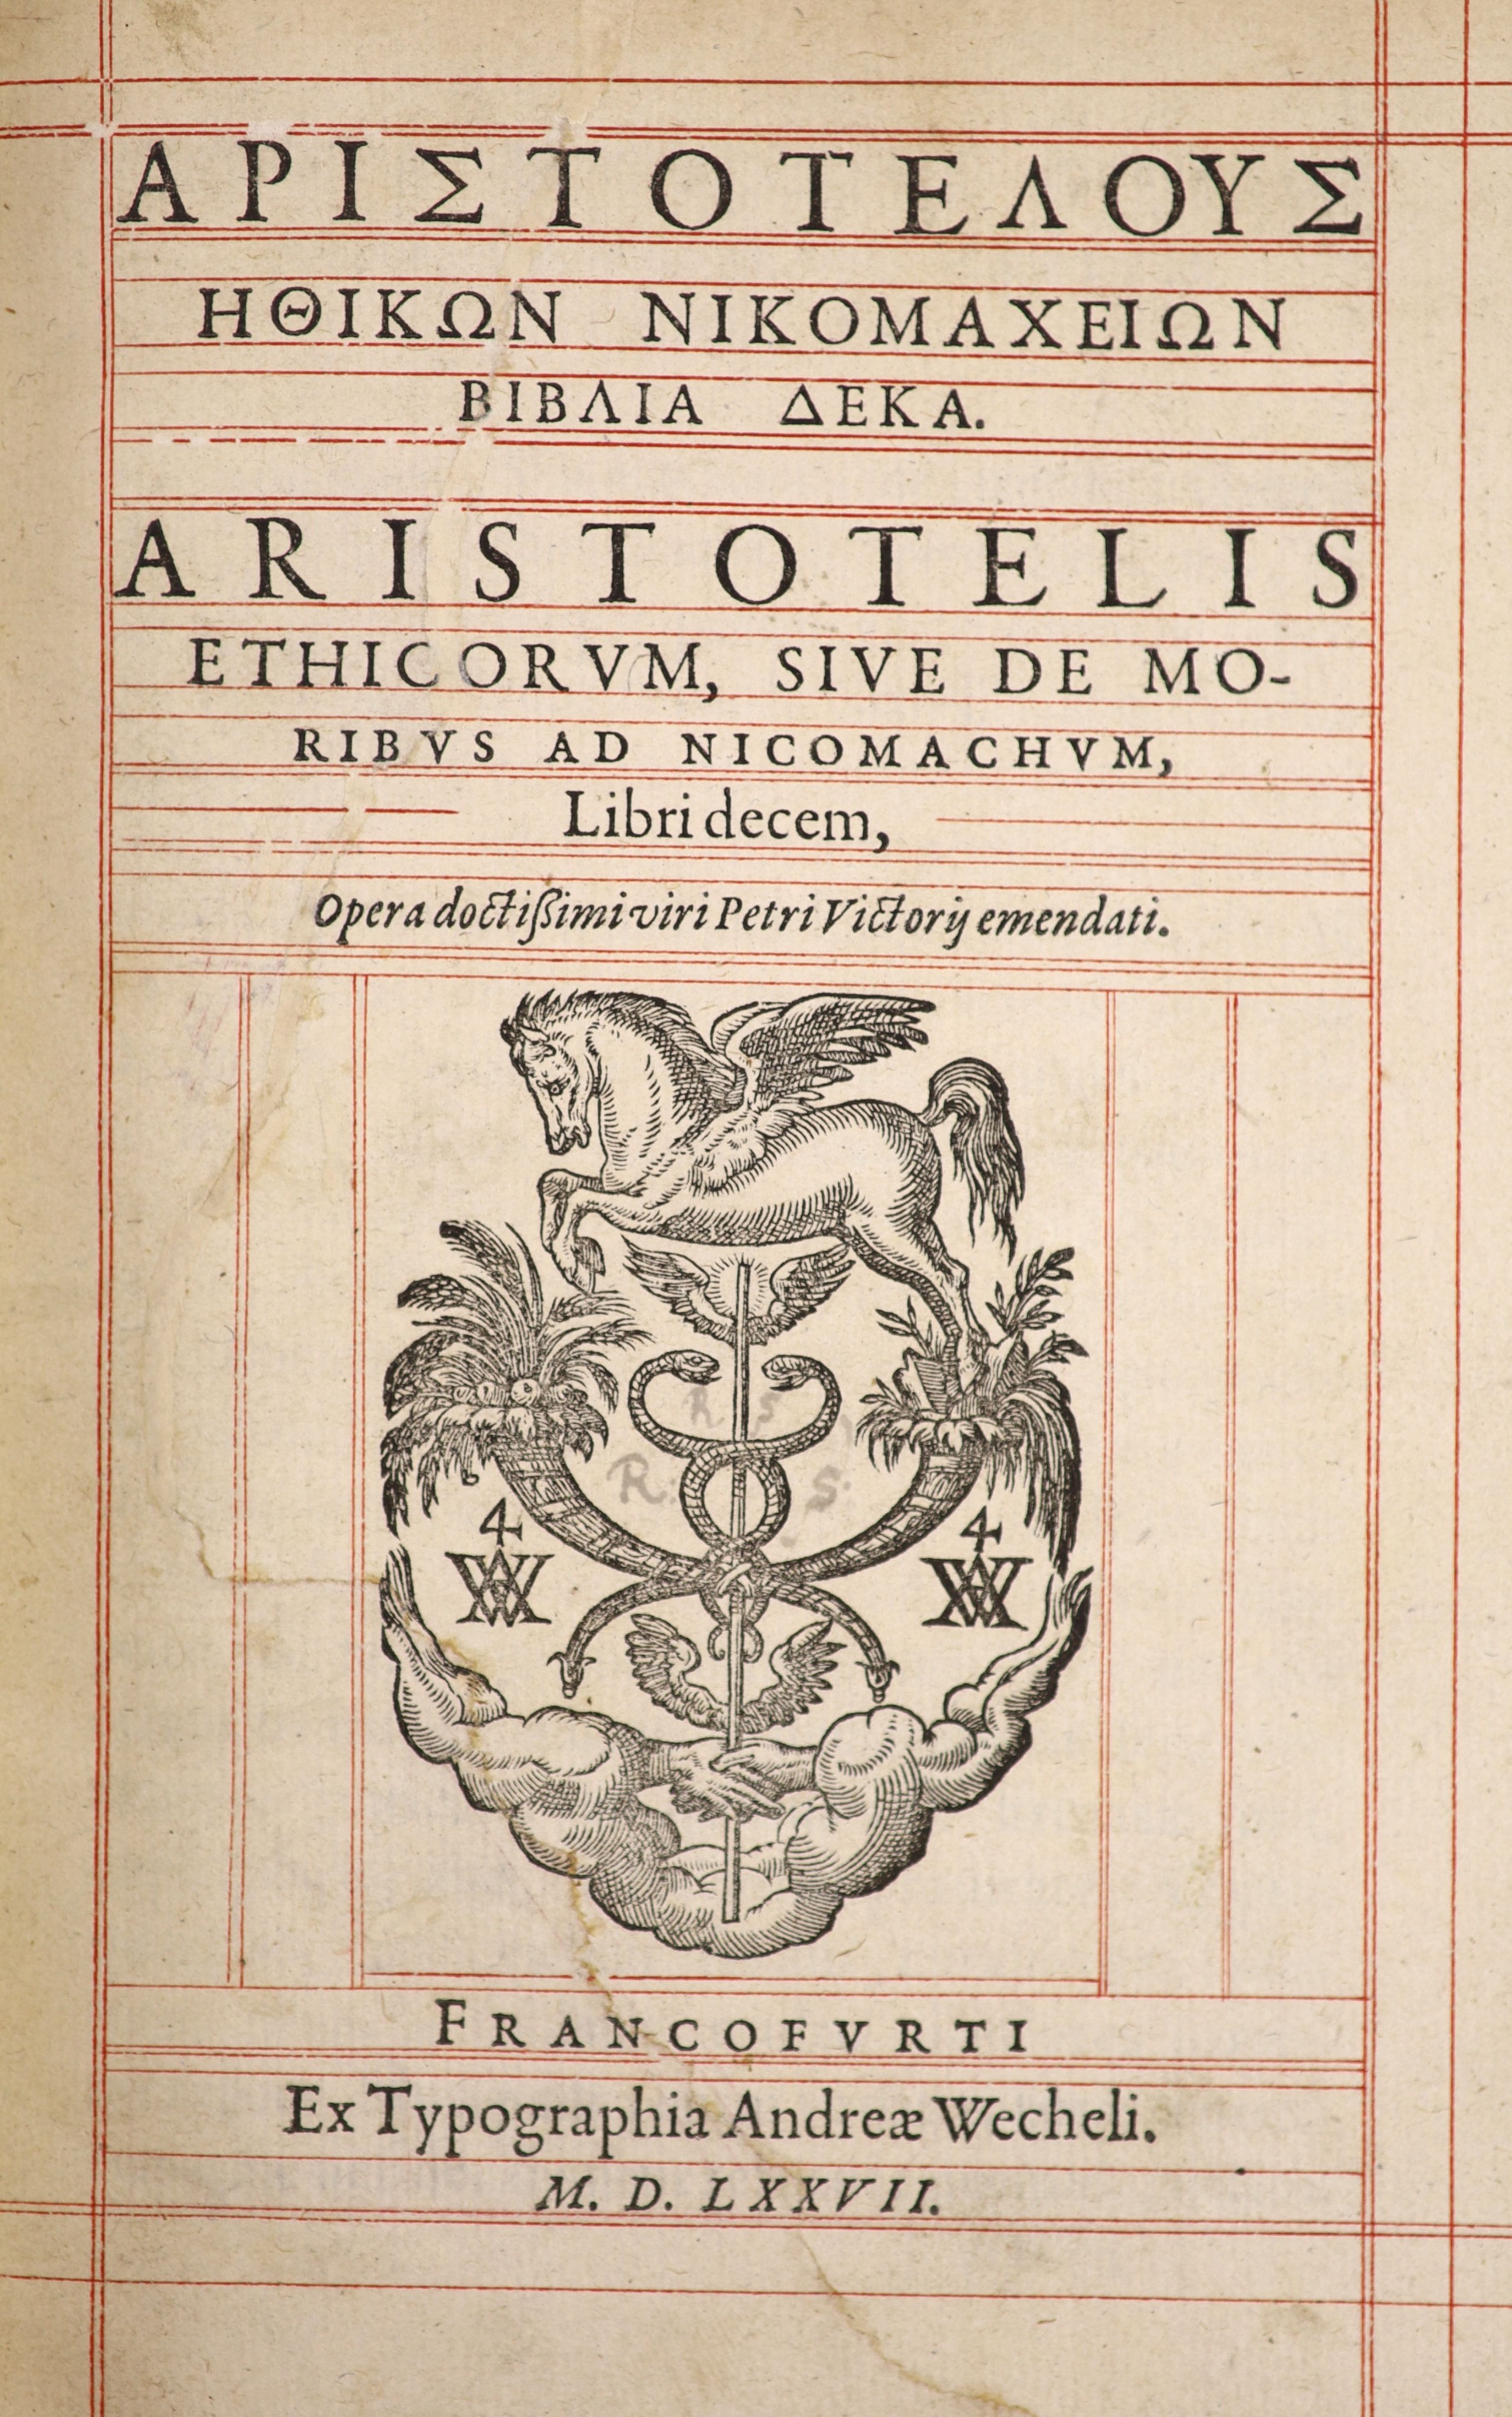 Aristotle (Gk. title) Ethicorum, sive de Moribus ad Nicomachum ... (8 ex 12), 192pp; engraved title device